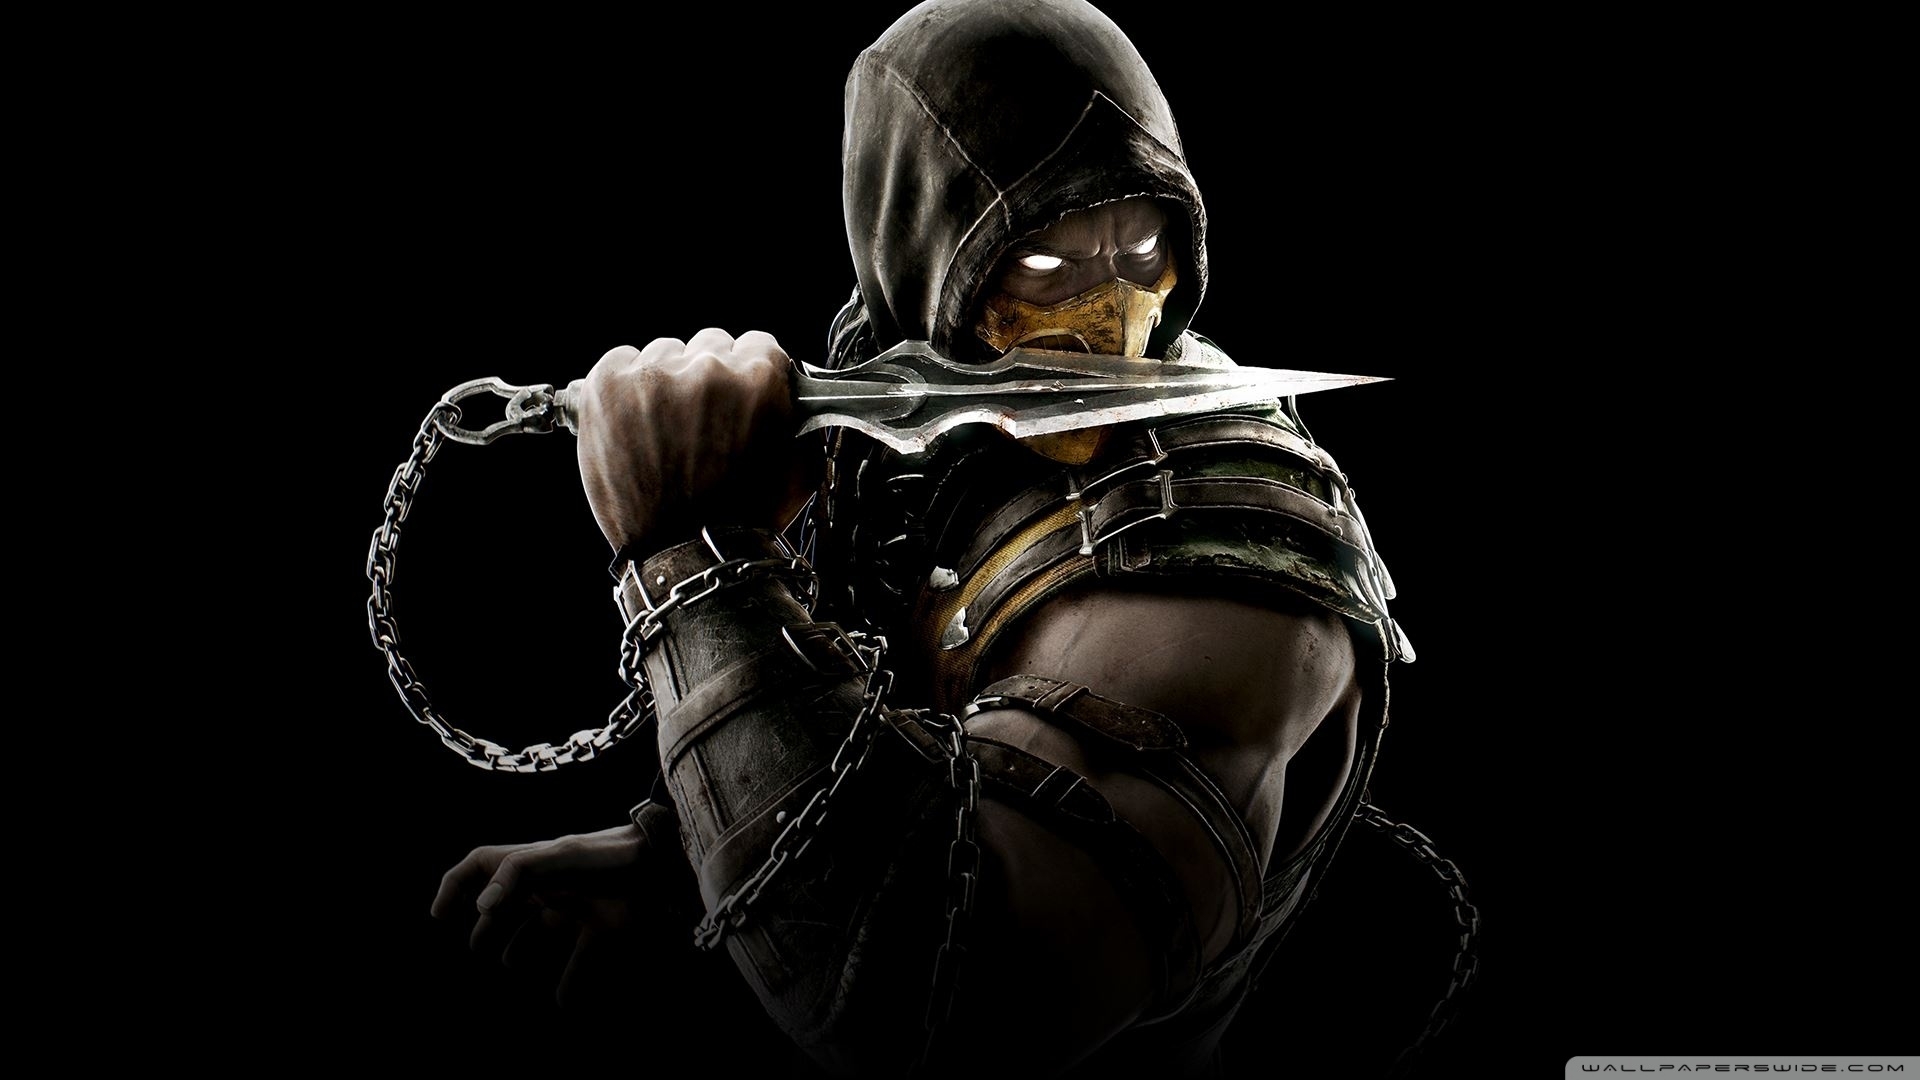 10 New Scorpion Mortal Kombat Wallpaper FULL HD 1080p For PC Background